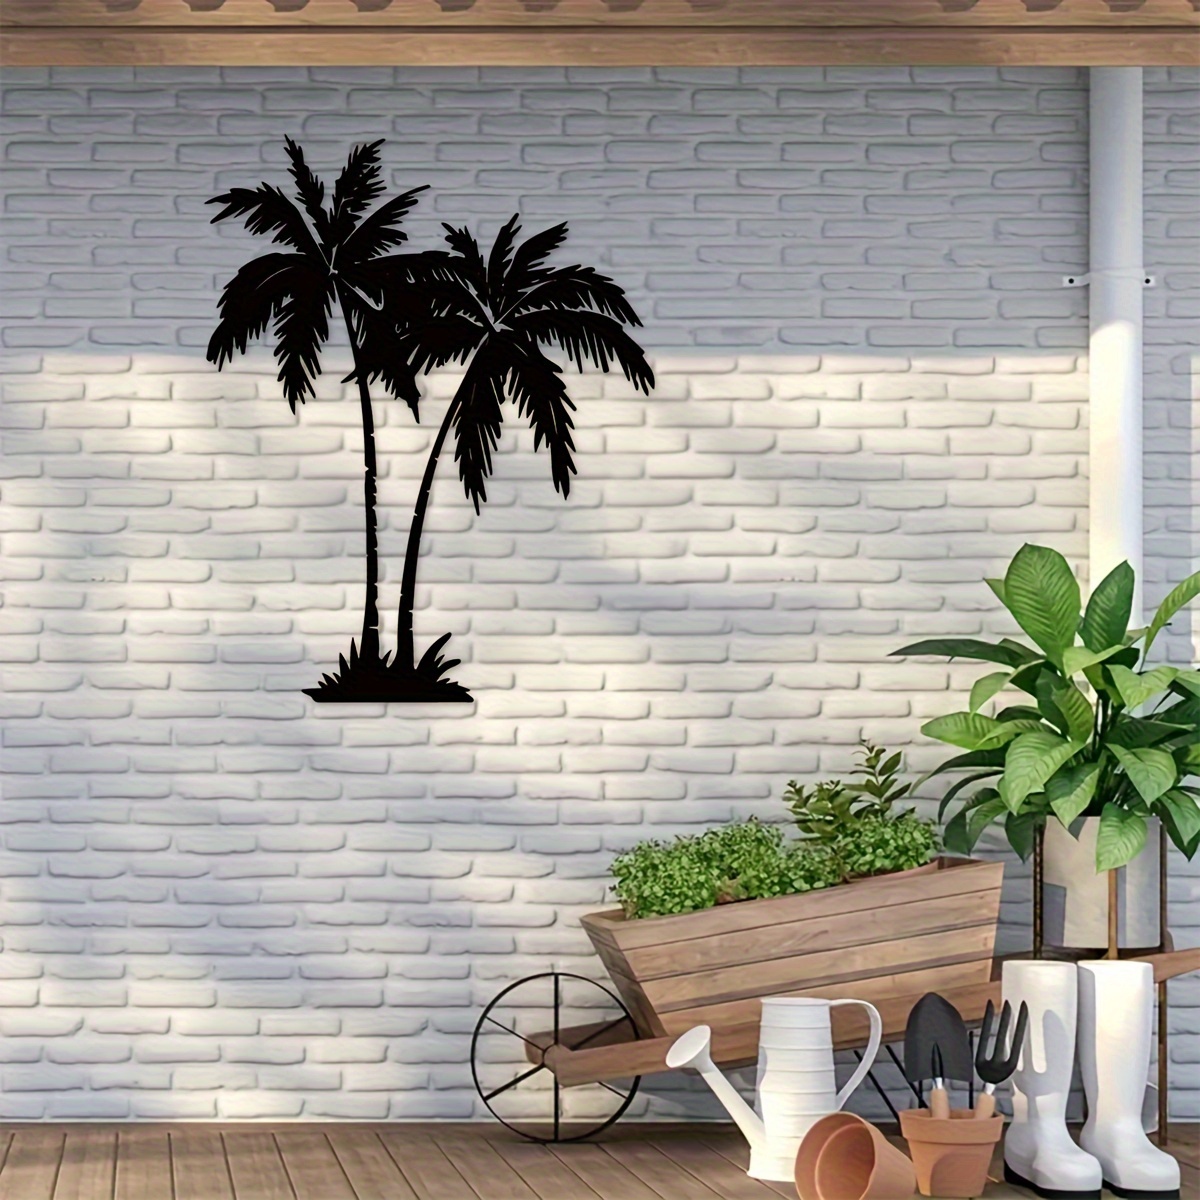 

1pc Tropical Palm Tree Metal Wall Art, Outdoor Wall Decor, Palm Leaf Art, Beach House Decor, Banana Plants Decor, Coastal House, Tree Wall Sign, Unique Home, Home Decor, Wall Decor, Wall Hanger